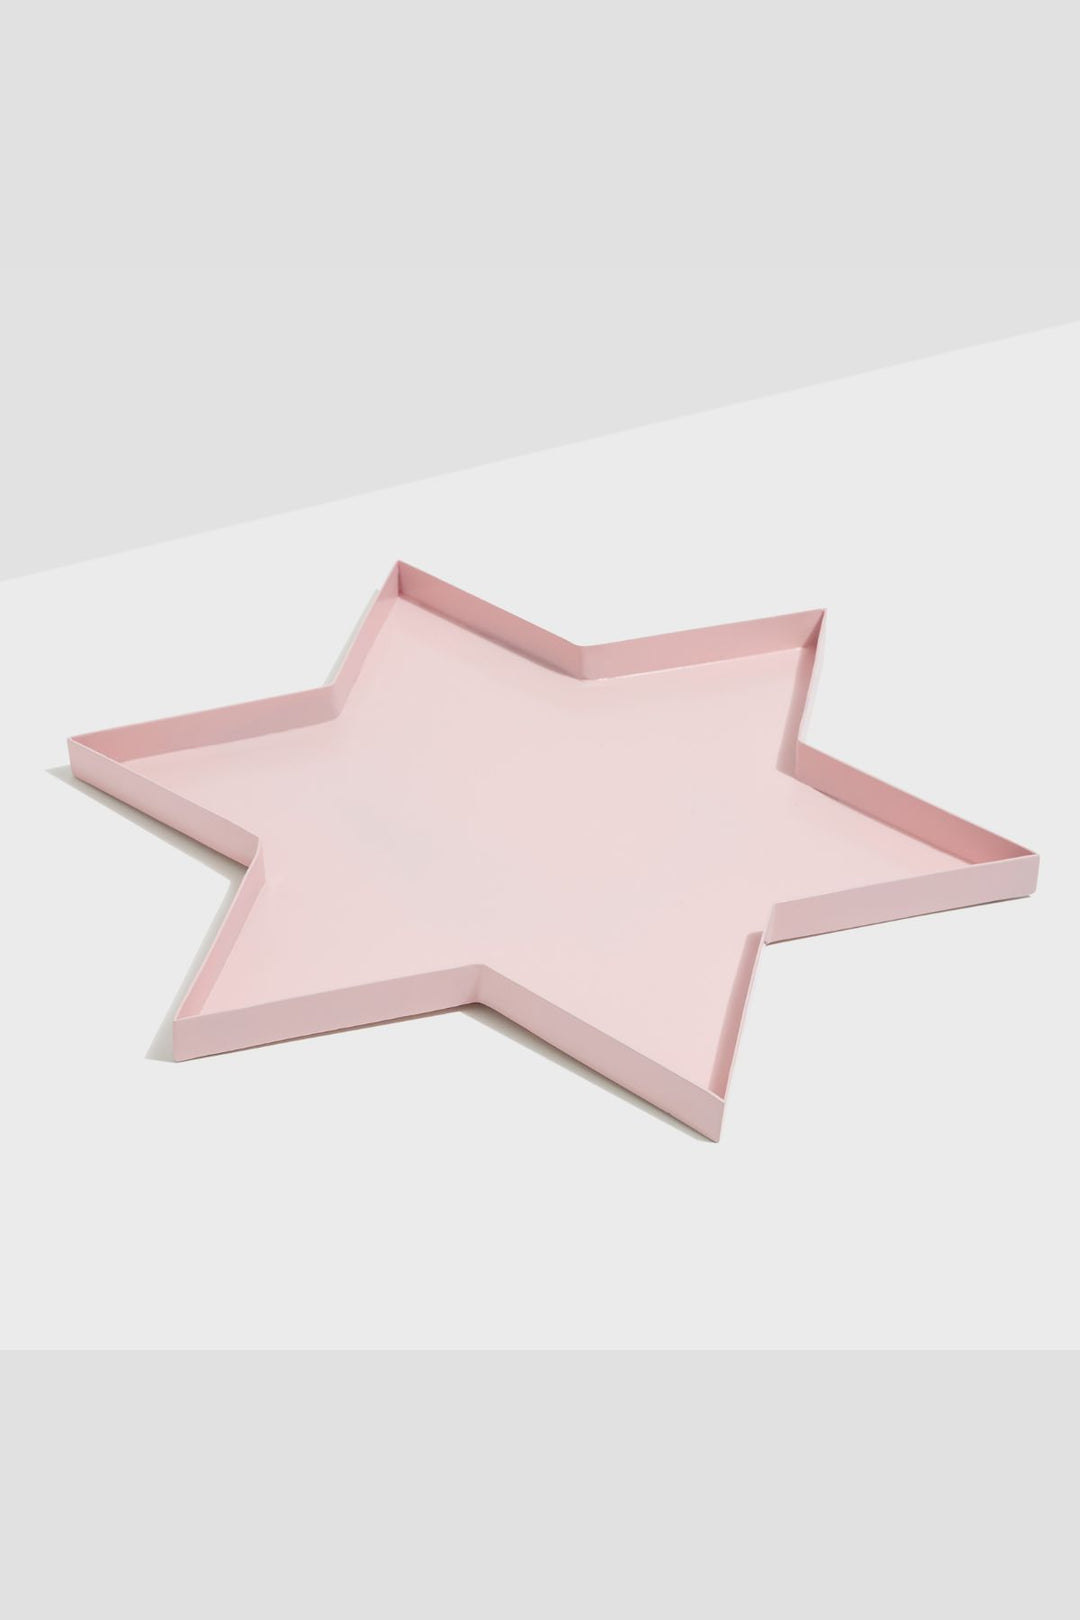 Metal Star Tray (Pink)